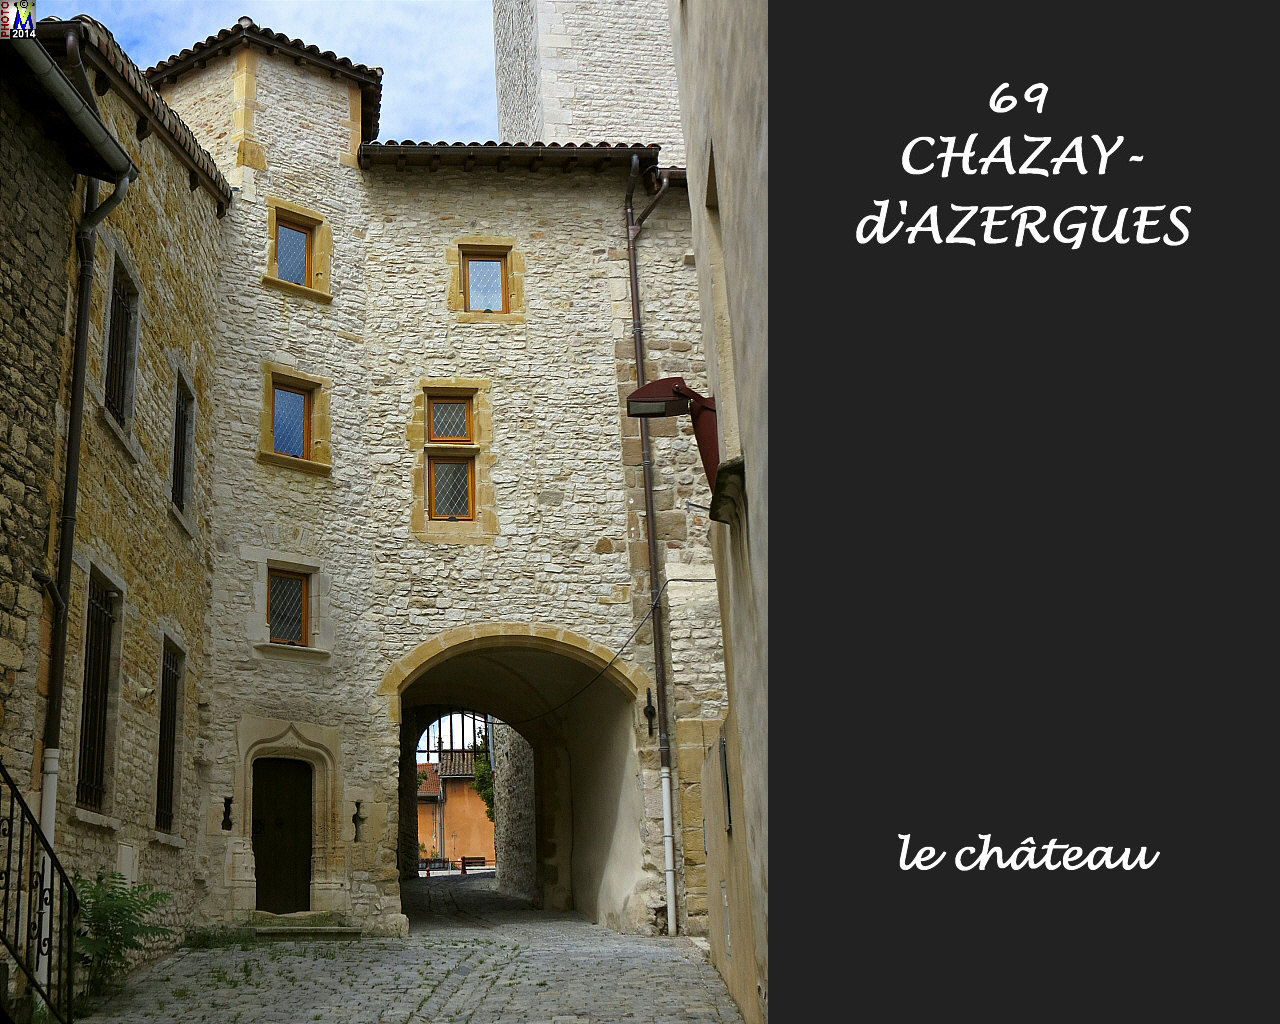 69CHAZAY-AZERGUES_chateau_116.jpg